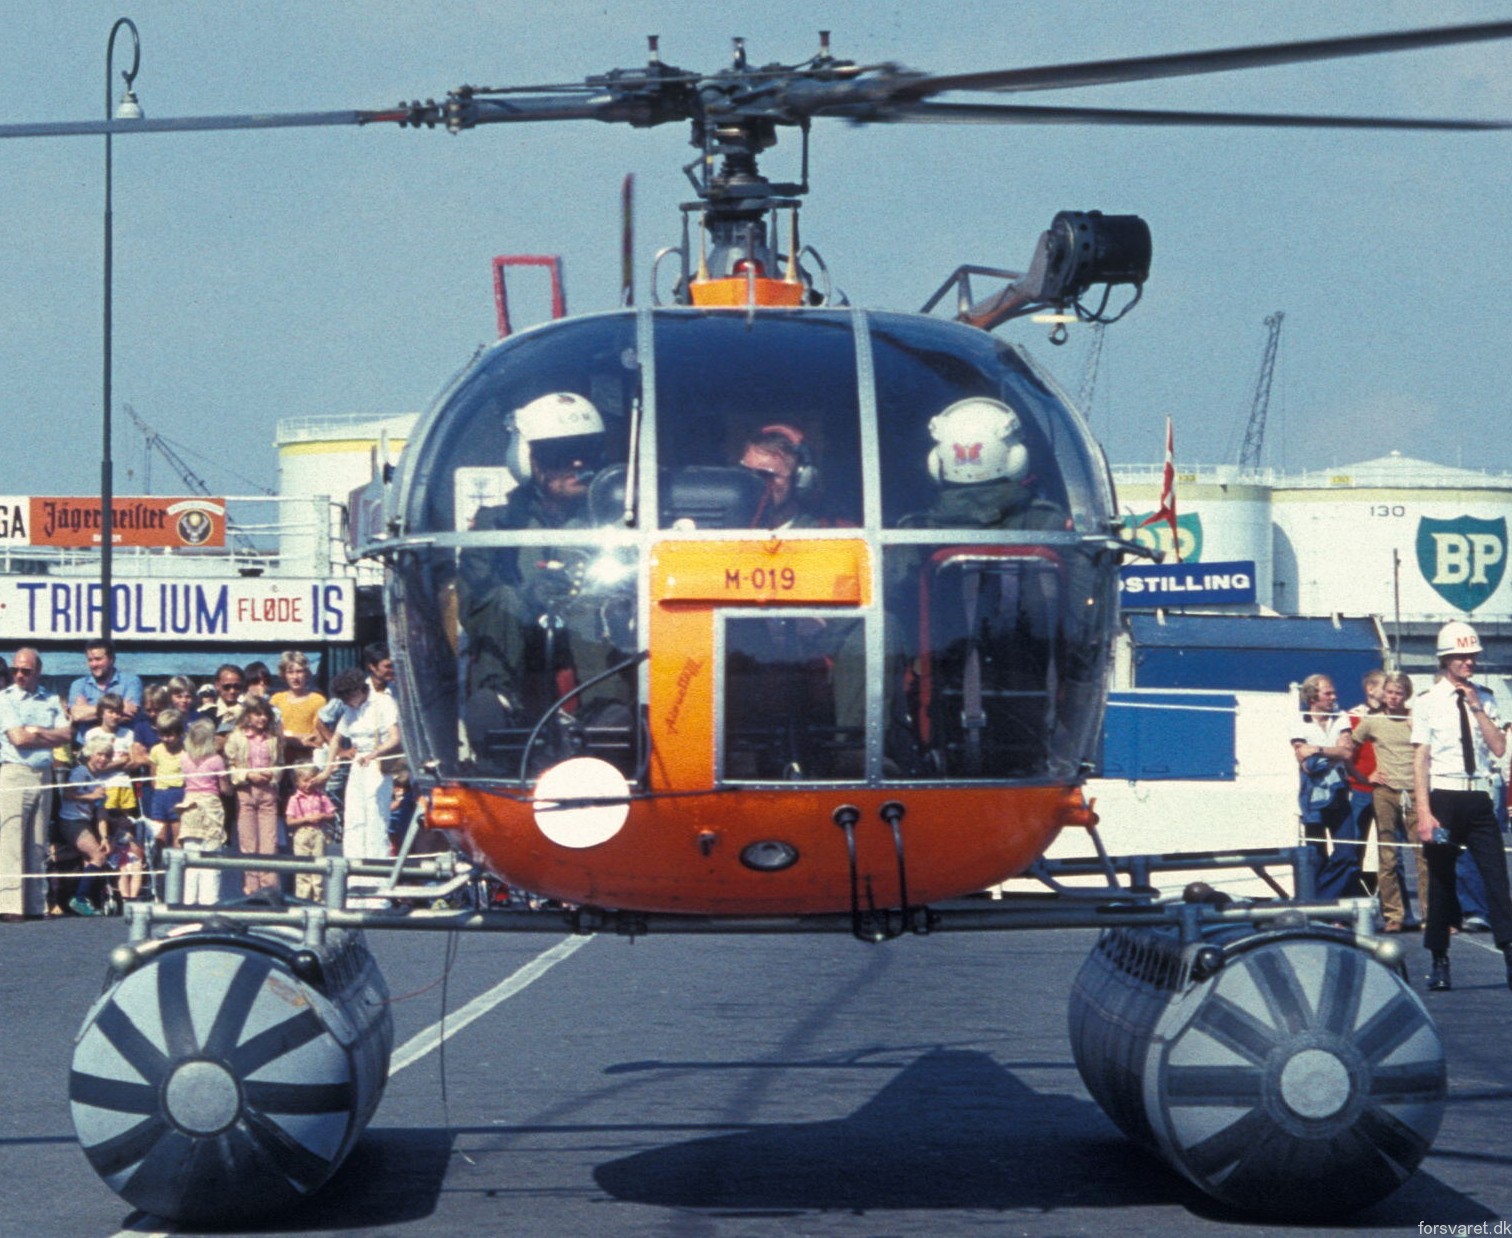 sa 316b alouette iii helicopter royal danish navy søværnet kongelige danske marine sud aviation m-019 02